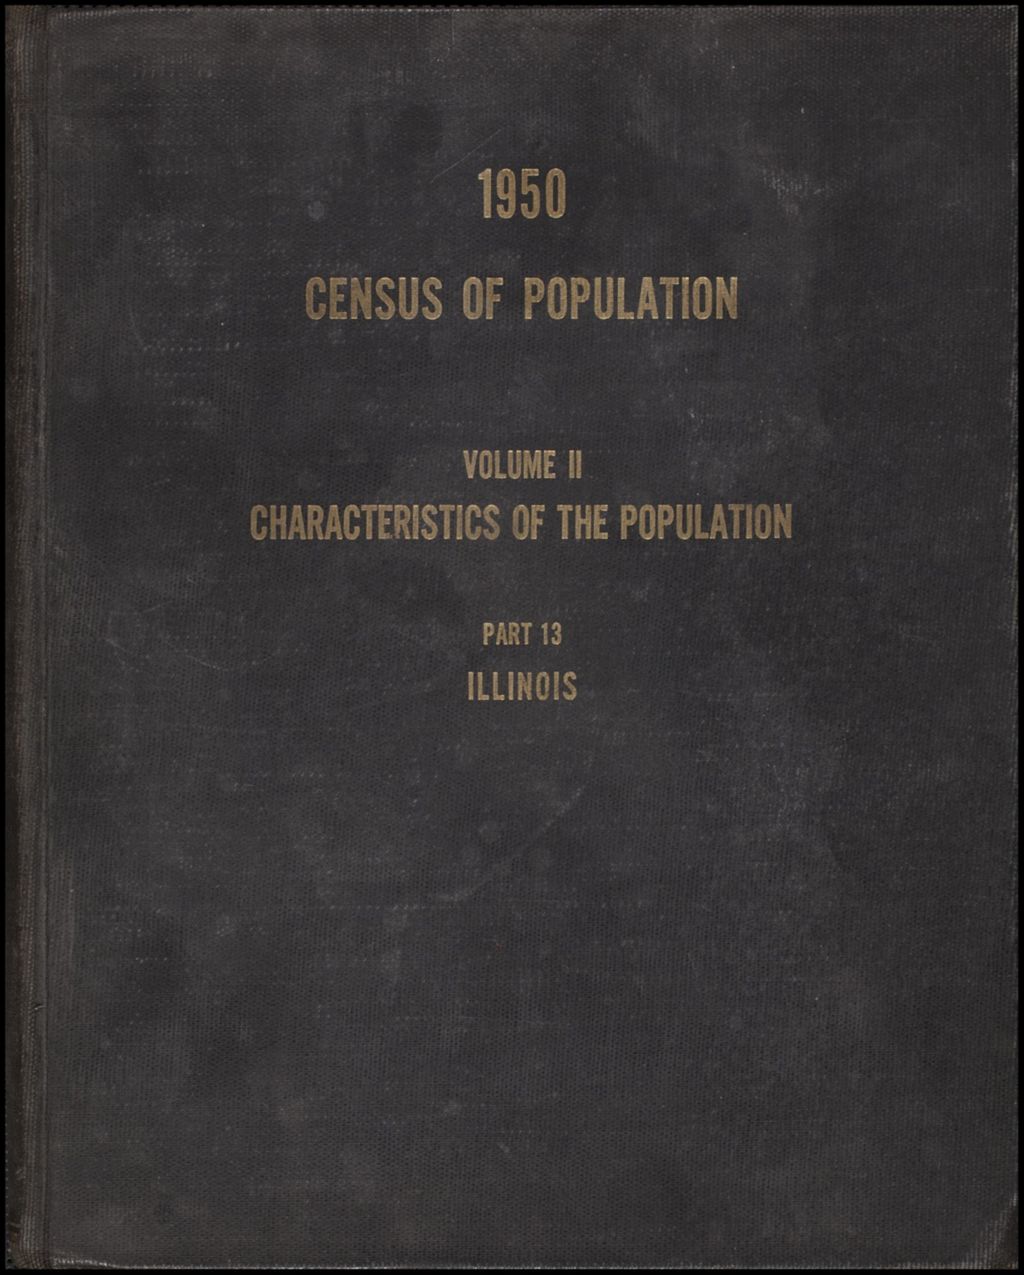 City of Chicago Population, 1950-1956 (Folder III-273)